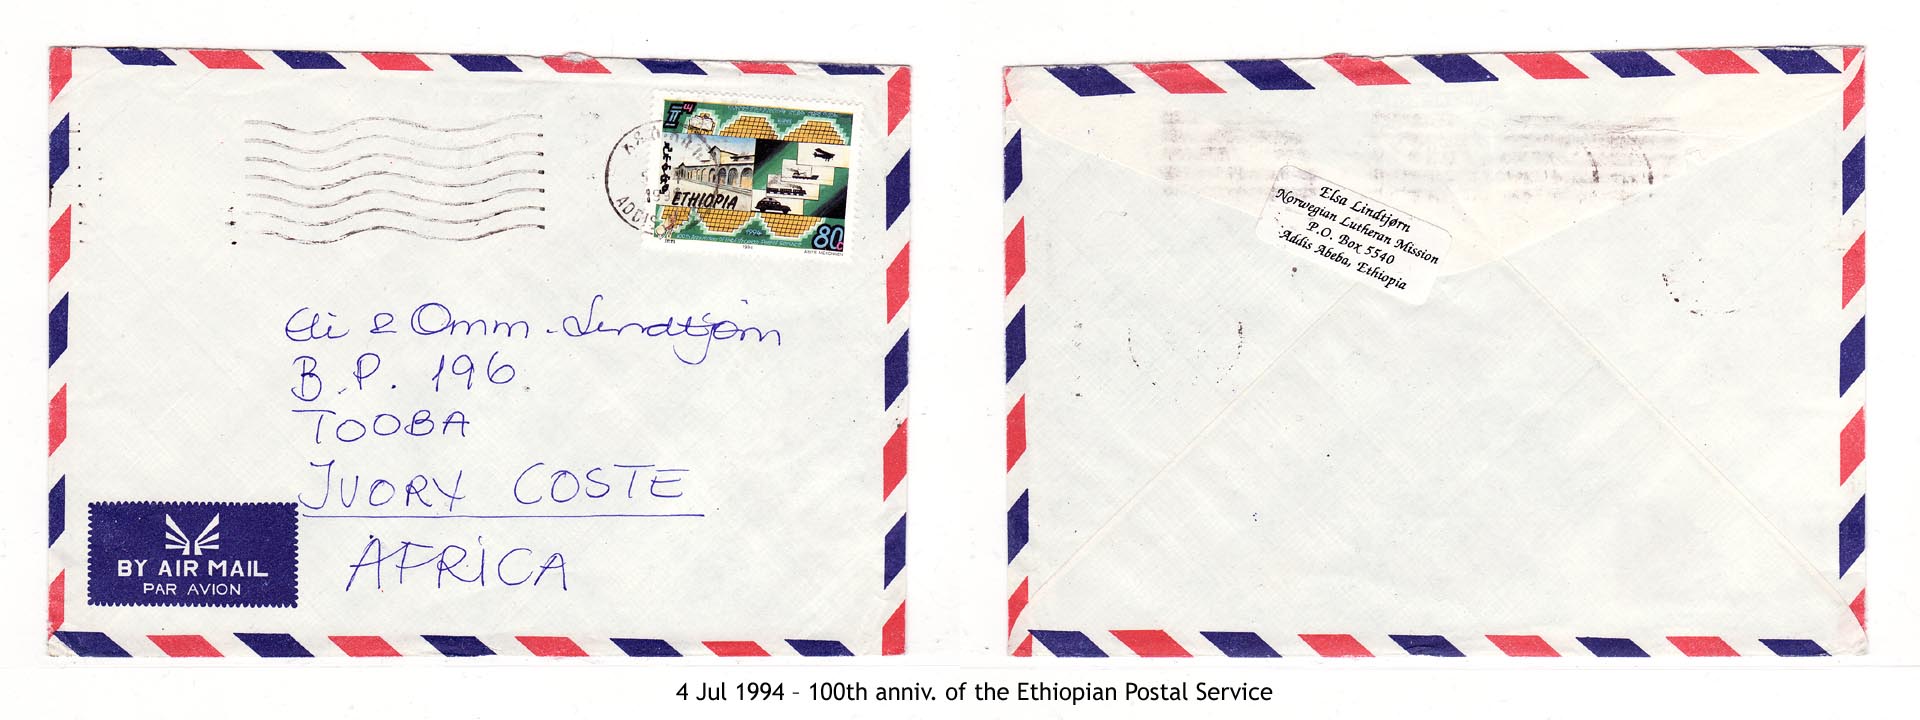 19940704 – 100th anniv. of the Ethiopian Postal Service